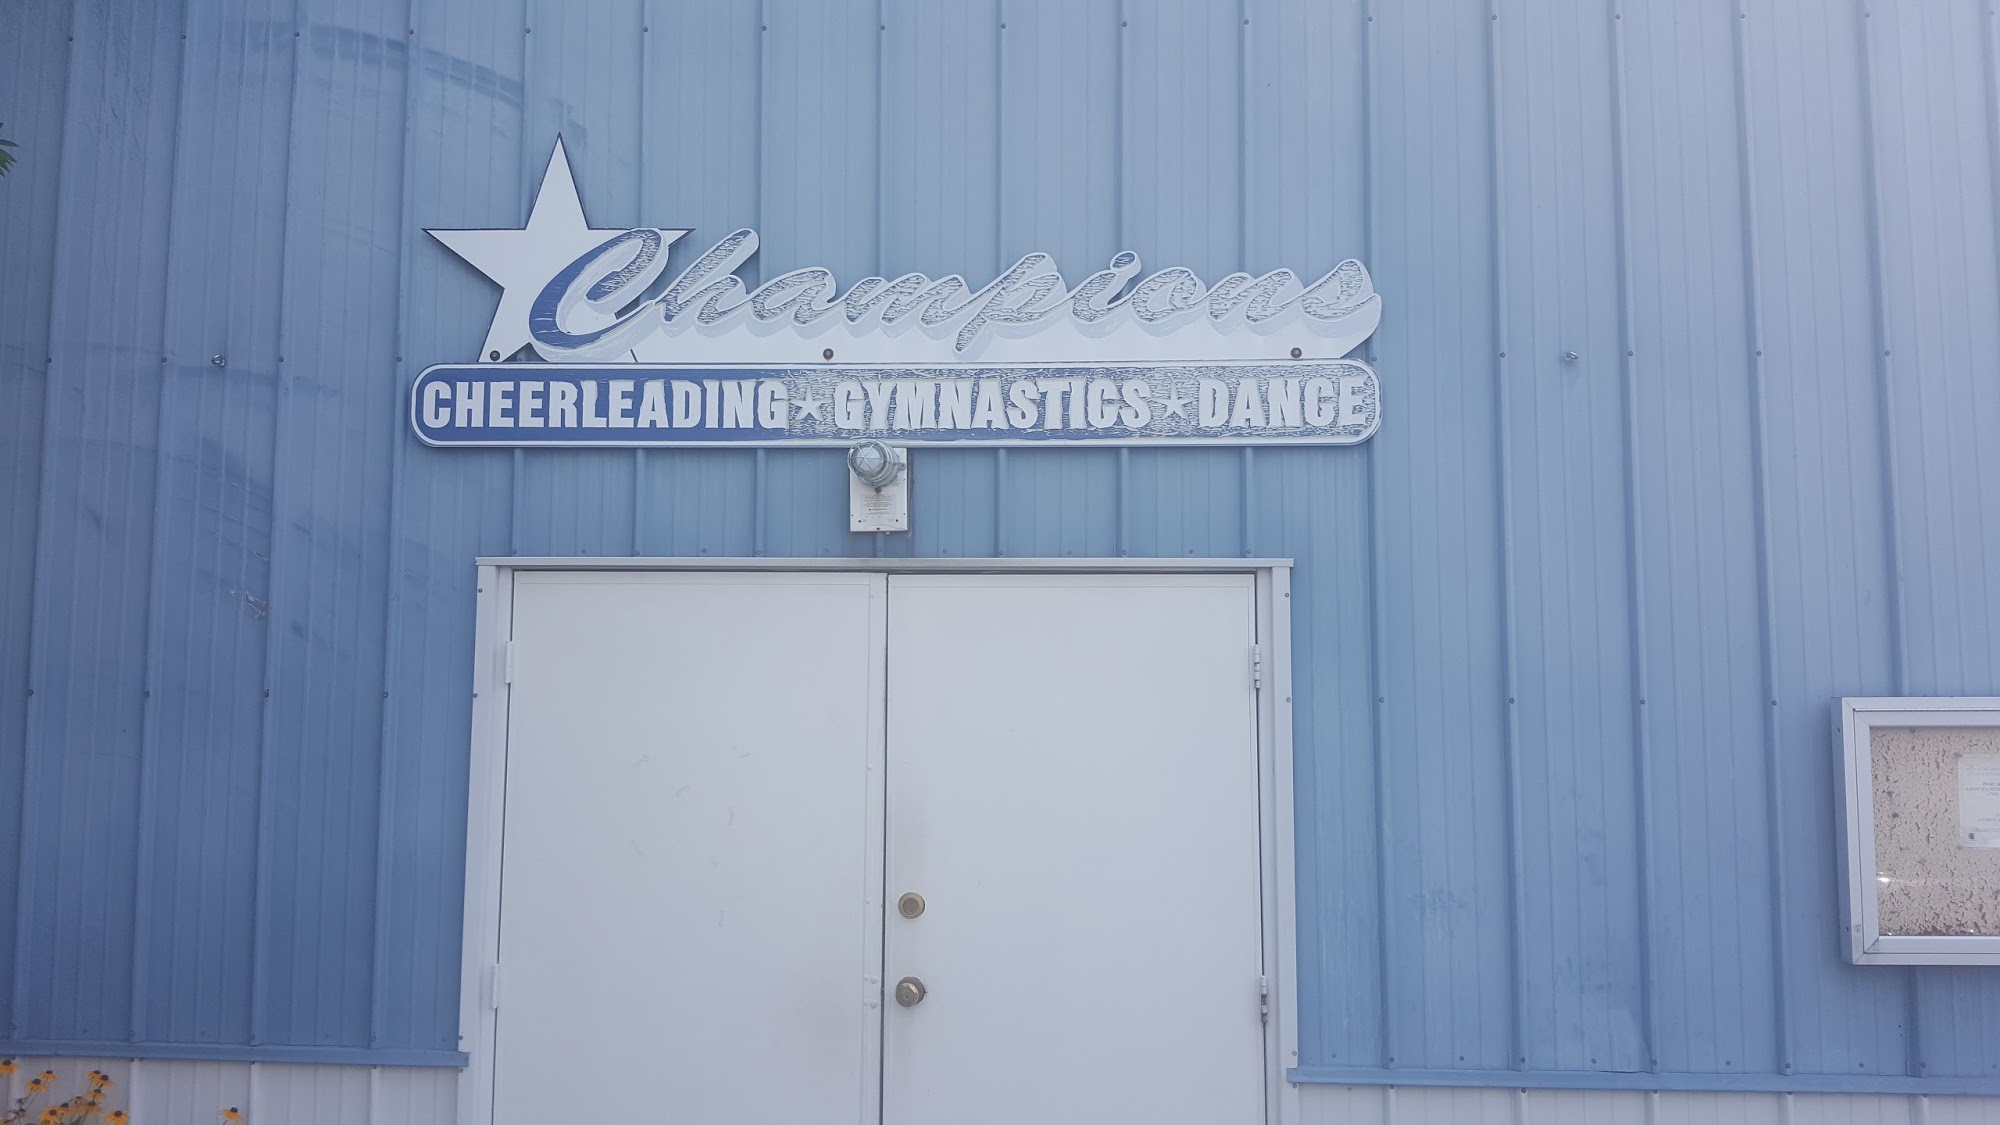 Champions Cheerleading, Gymnastics and Dance Center, Inc.